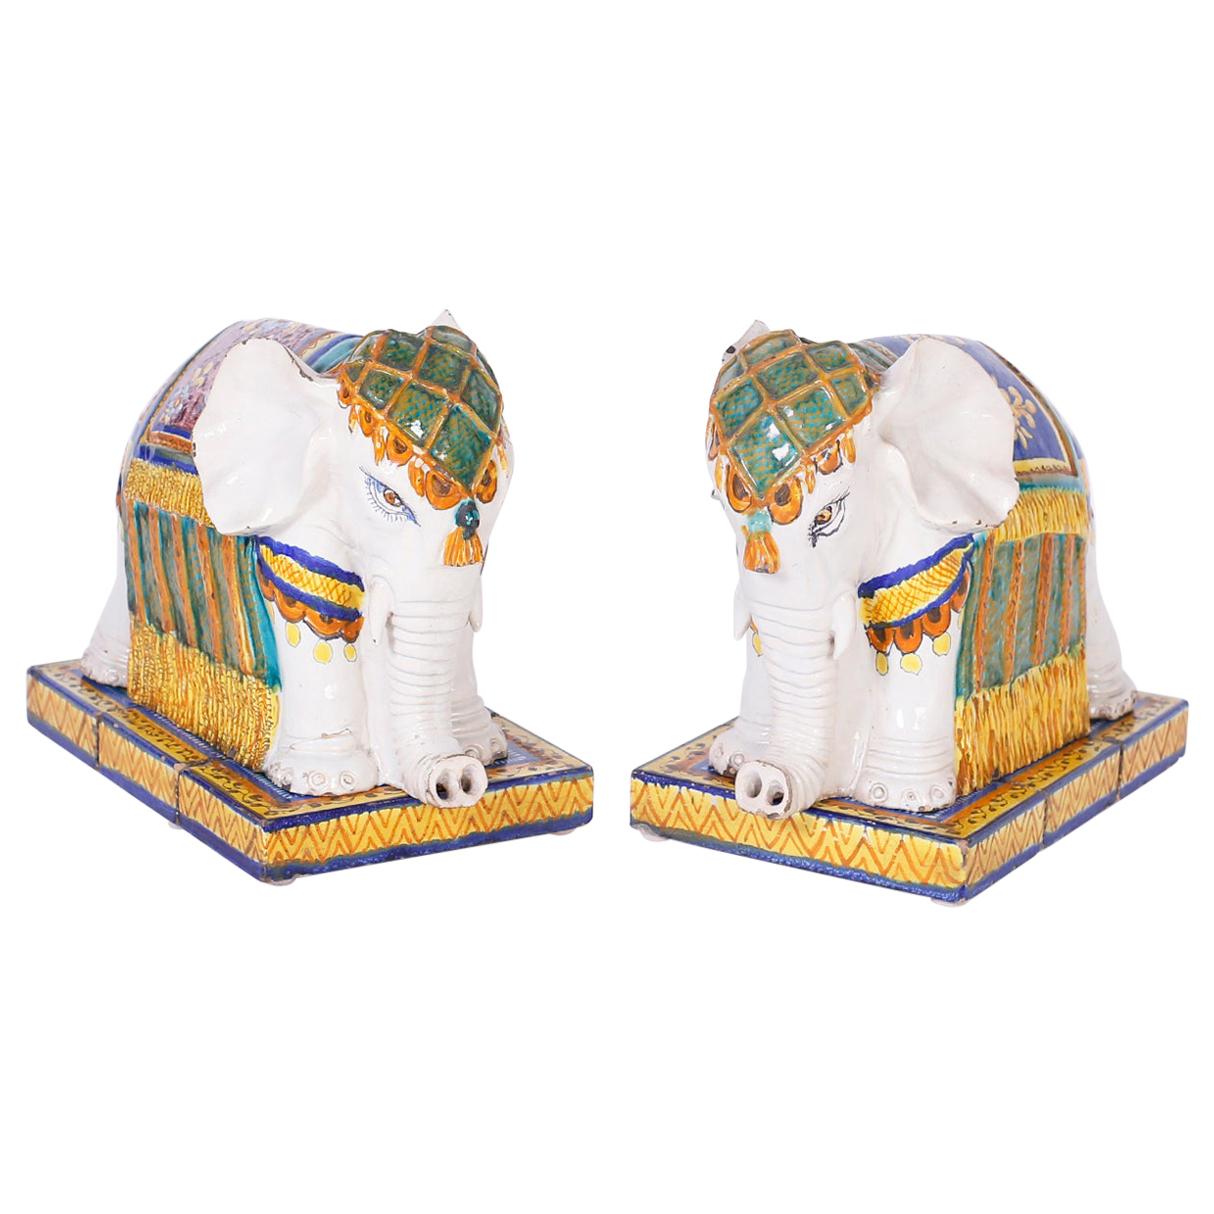 Pair of Terracotta Elephants Ornaments